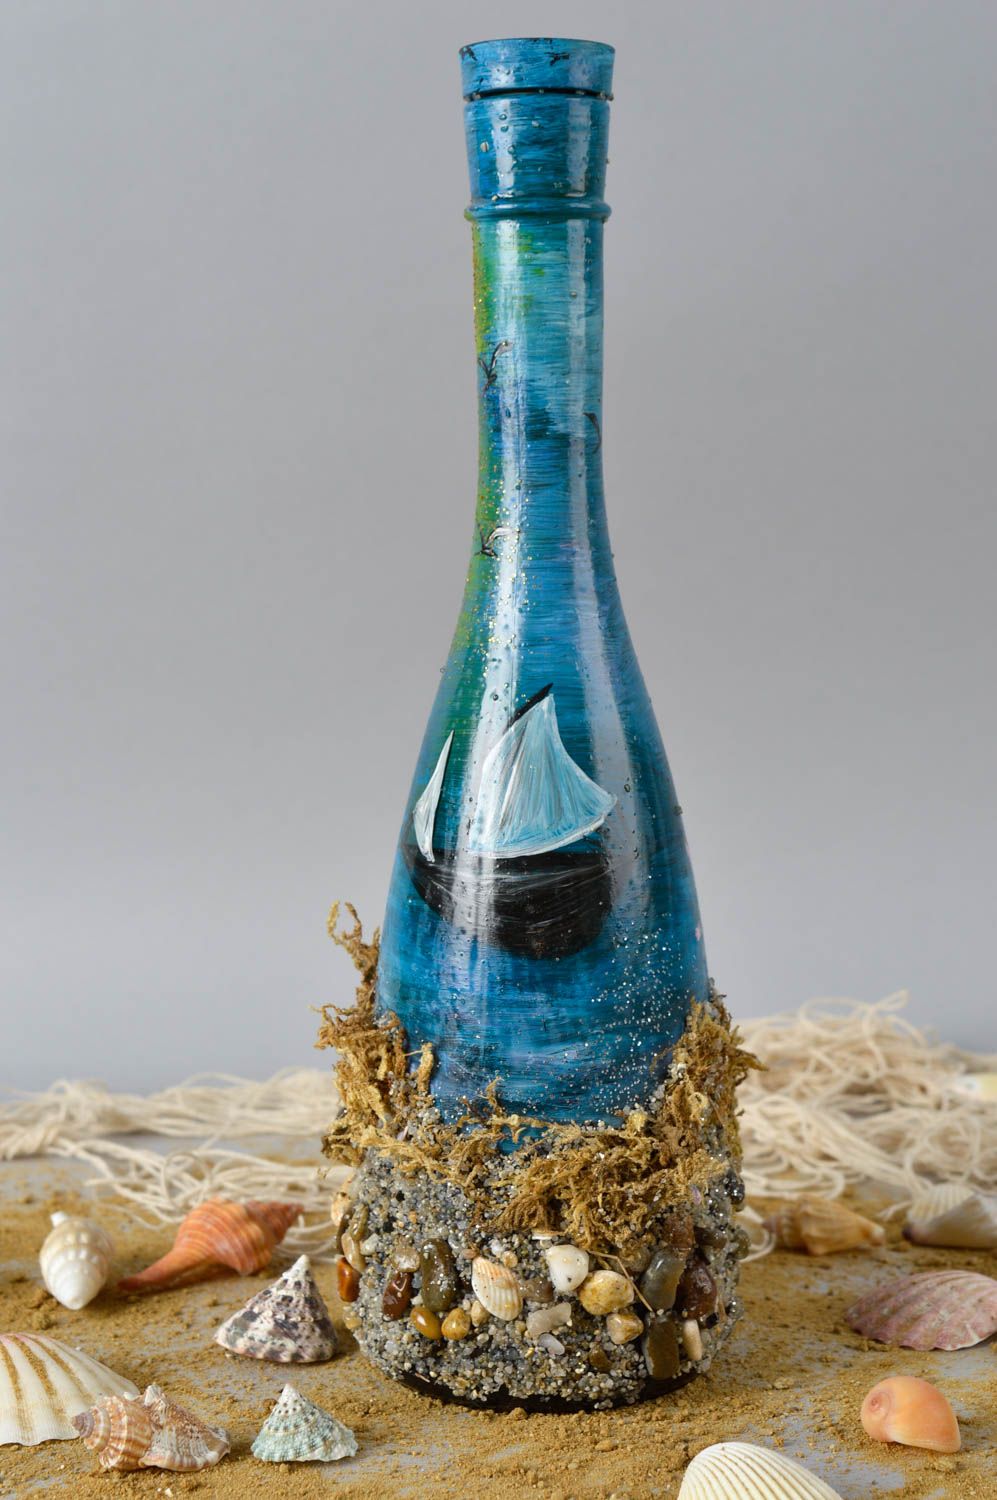 Stylish handmade bottle design decorative bottle table setting for decor only photo 1